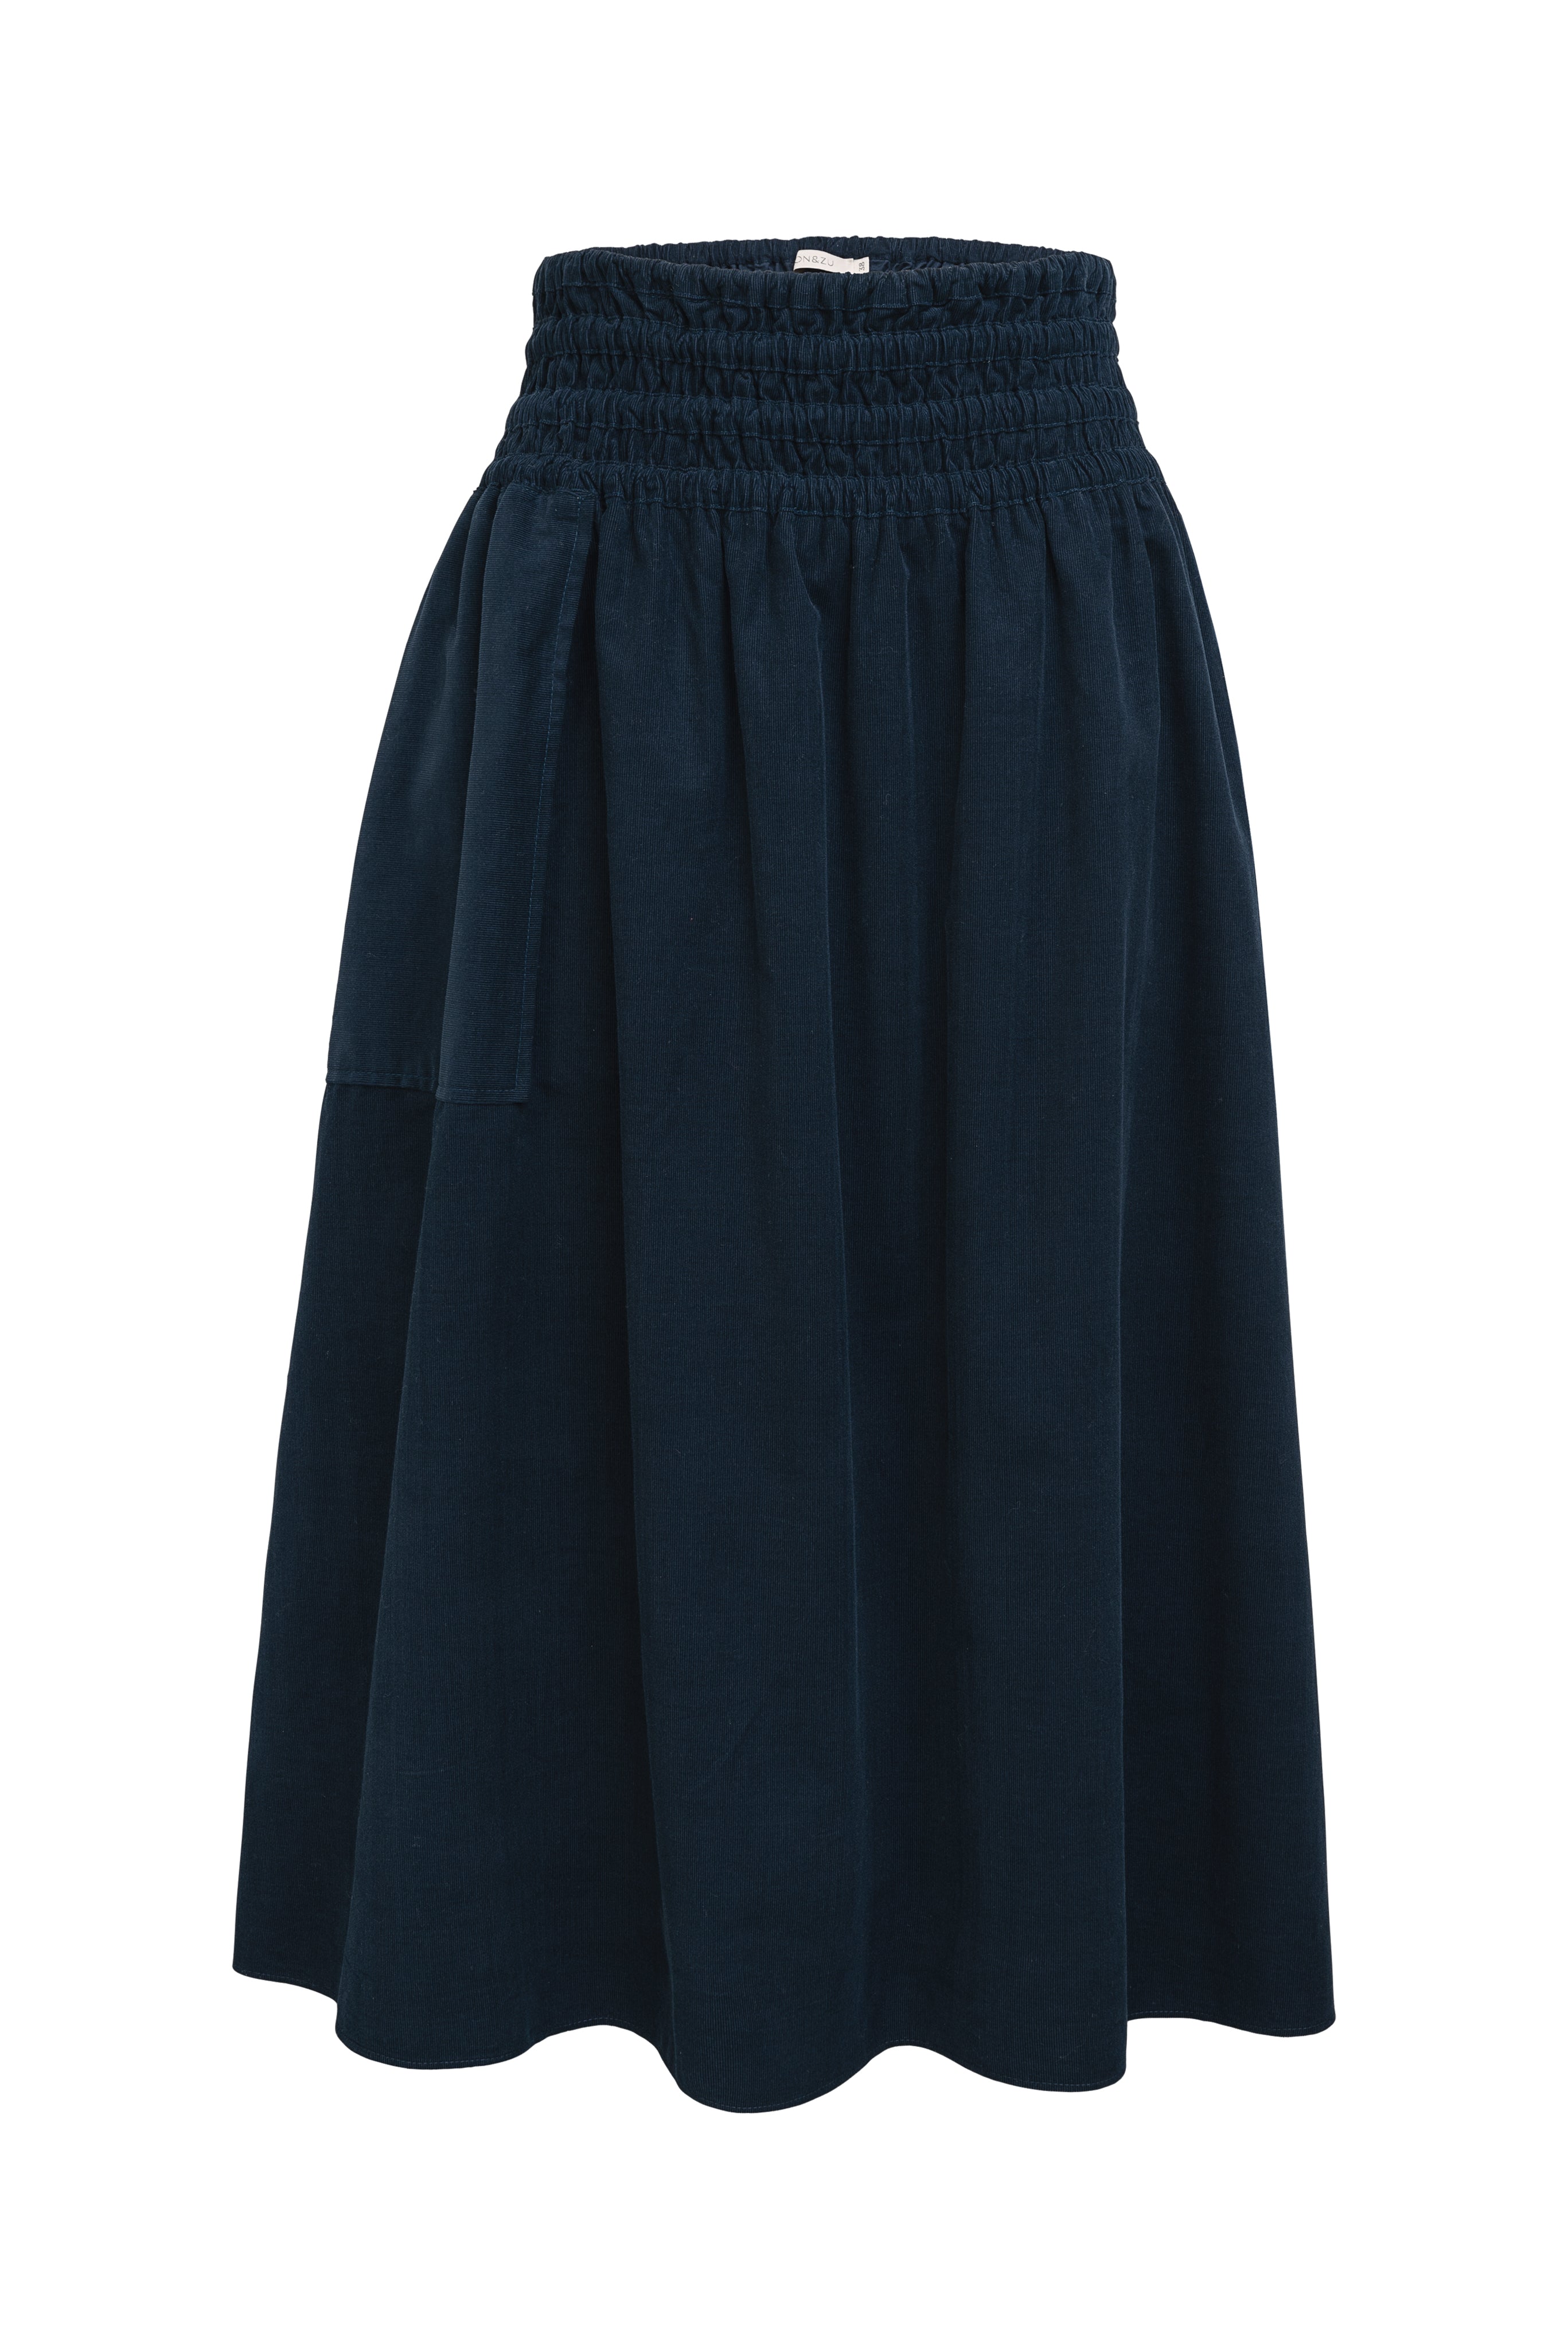 Casual corduroy skirt